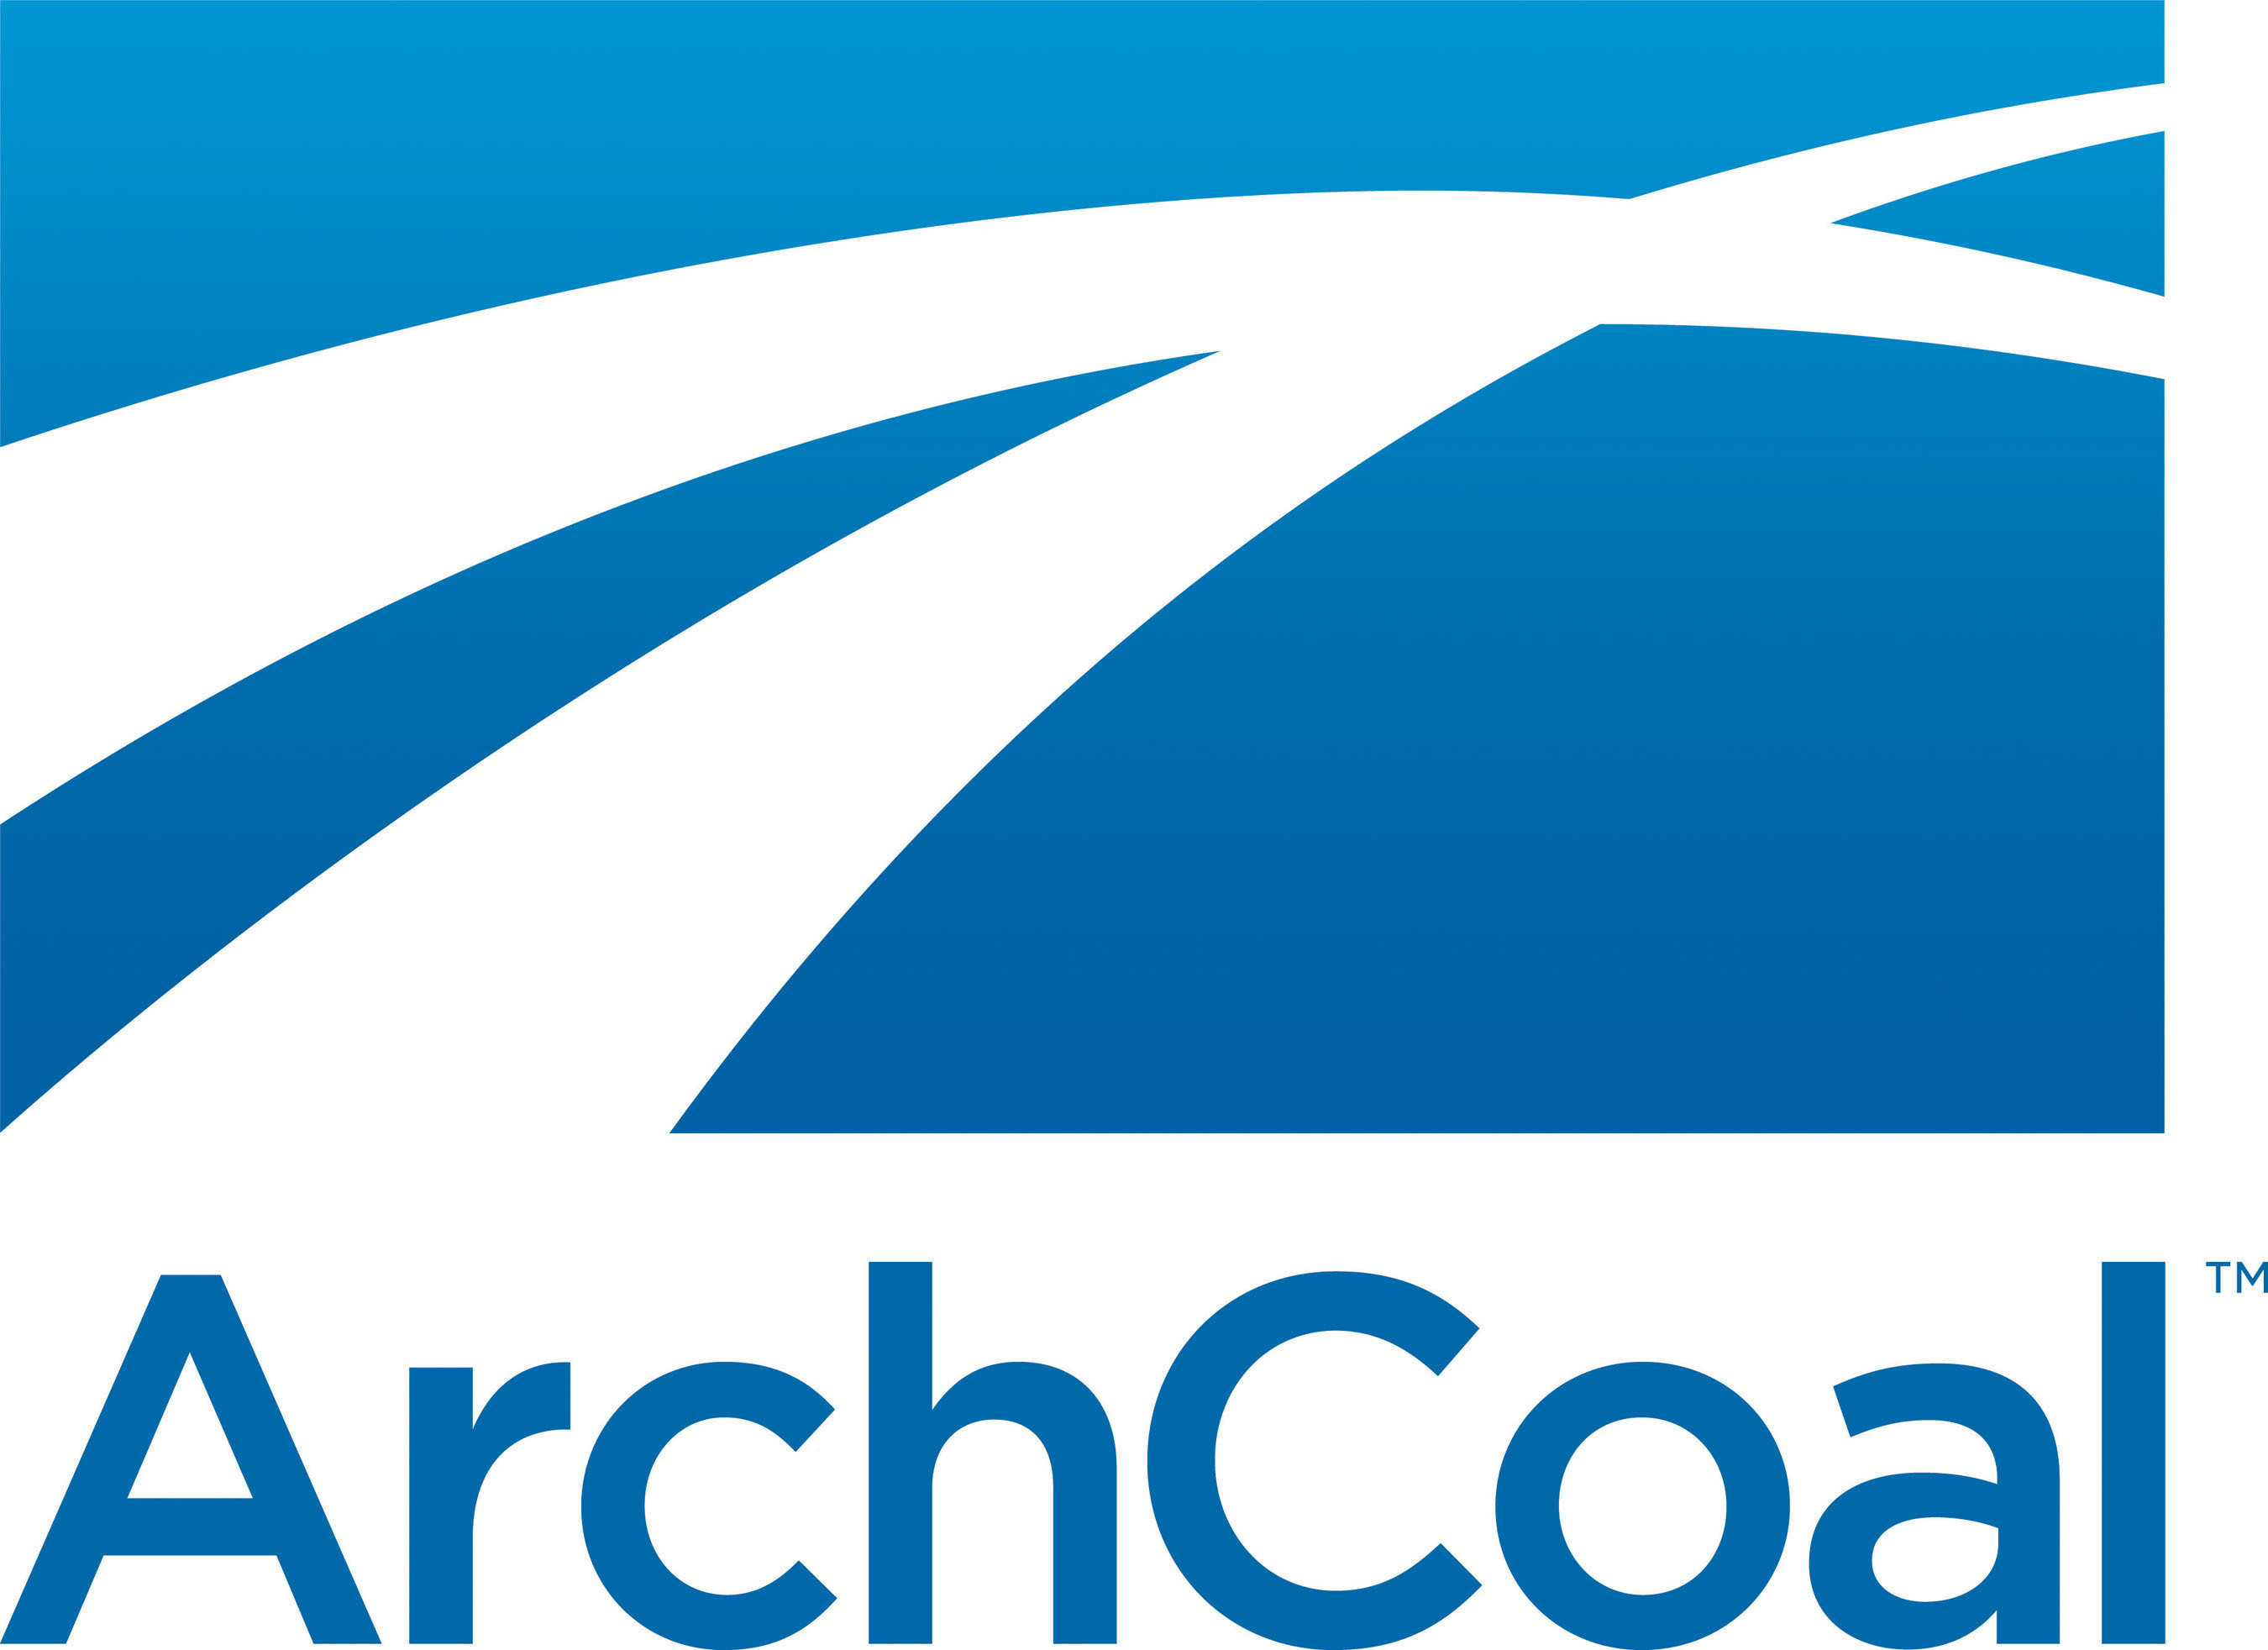 Arch Coal, Inc. logo. (PRNewsFoto/Arch Coal, Inc.) (PRNewsFoto/)